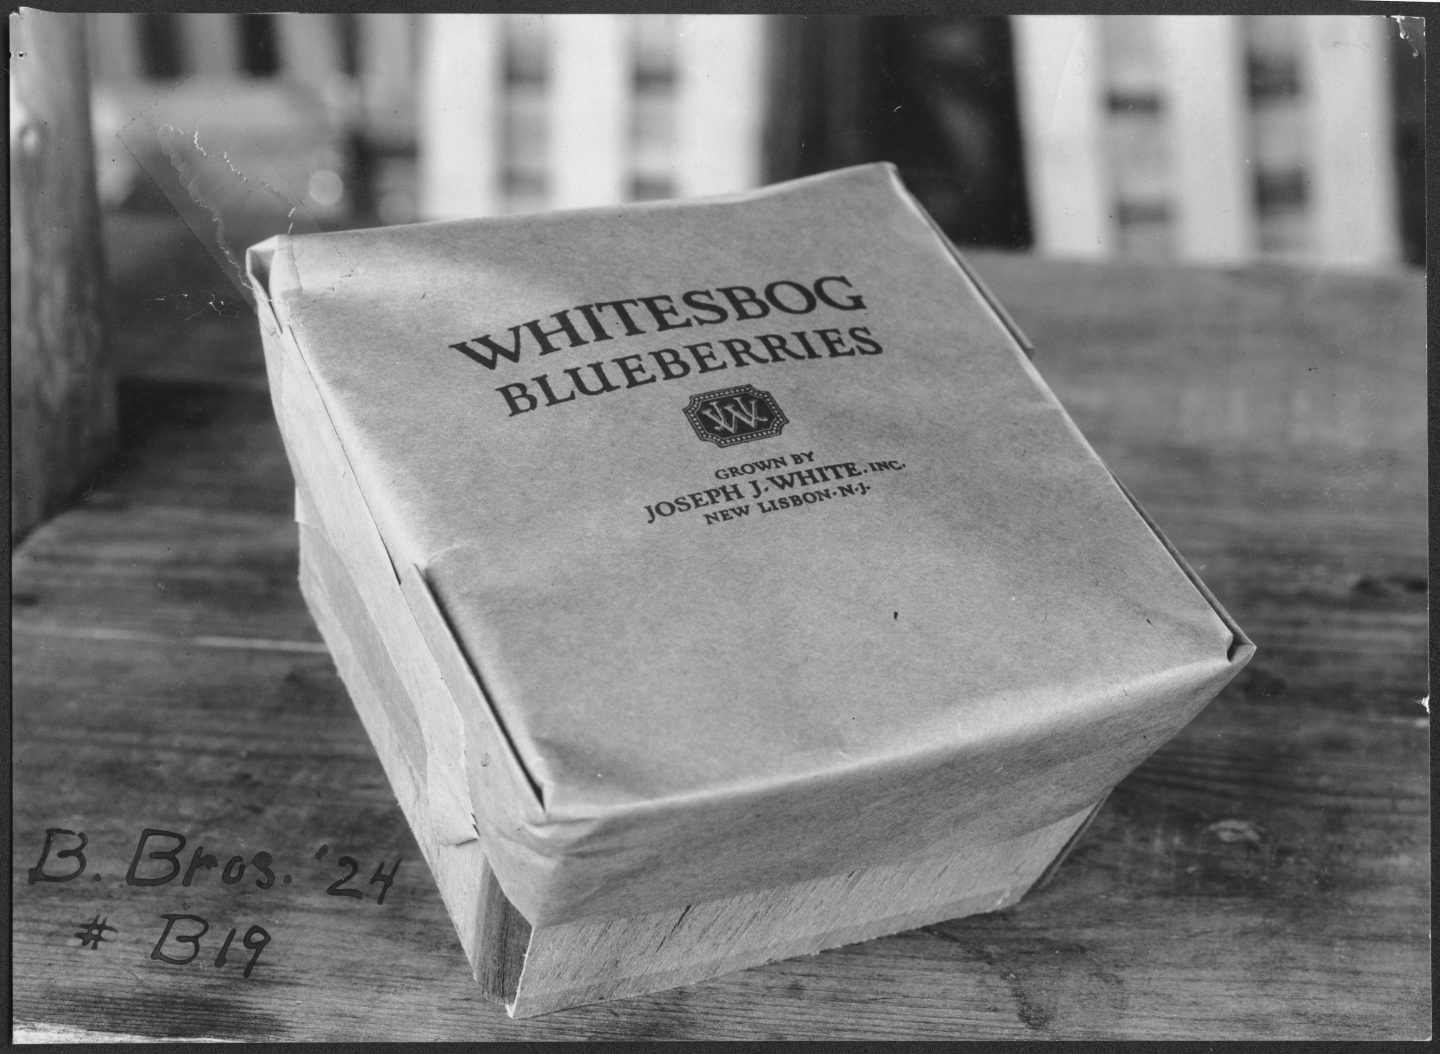 Black-and-White-Photo-of-Whitesbog-Highbush-Blueberry-Package-in-1922-1440x1054.jpg